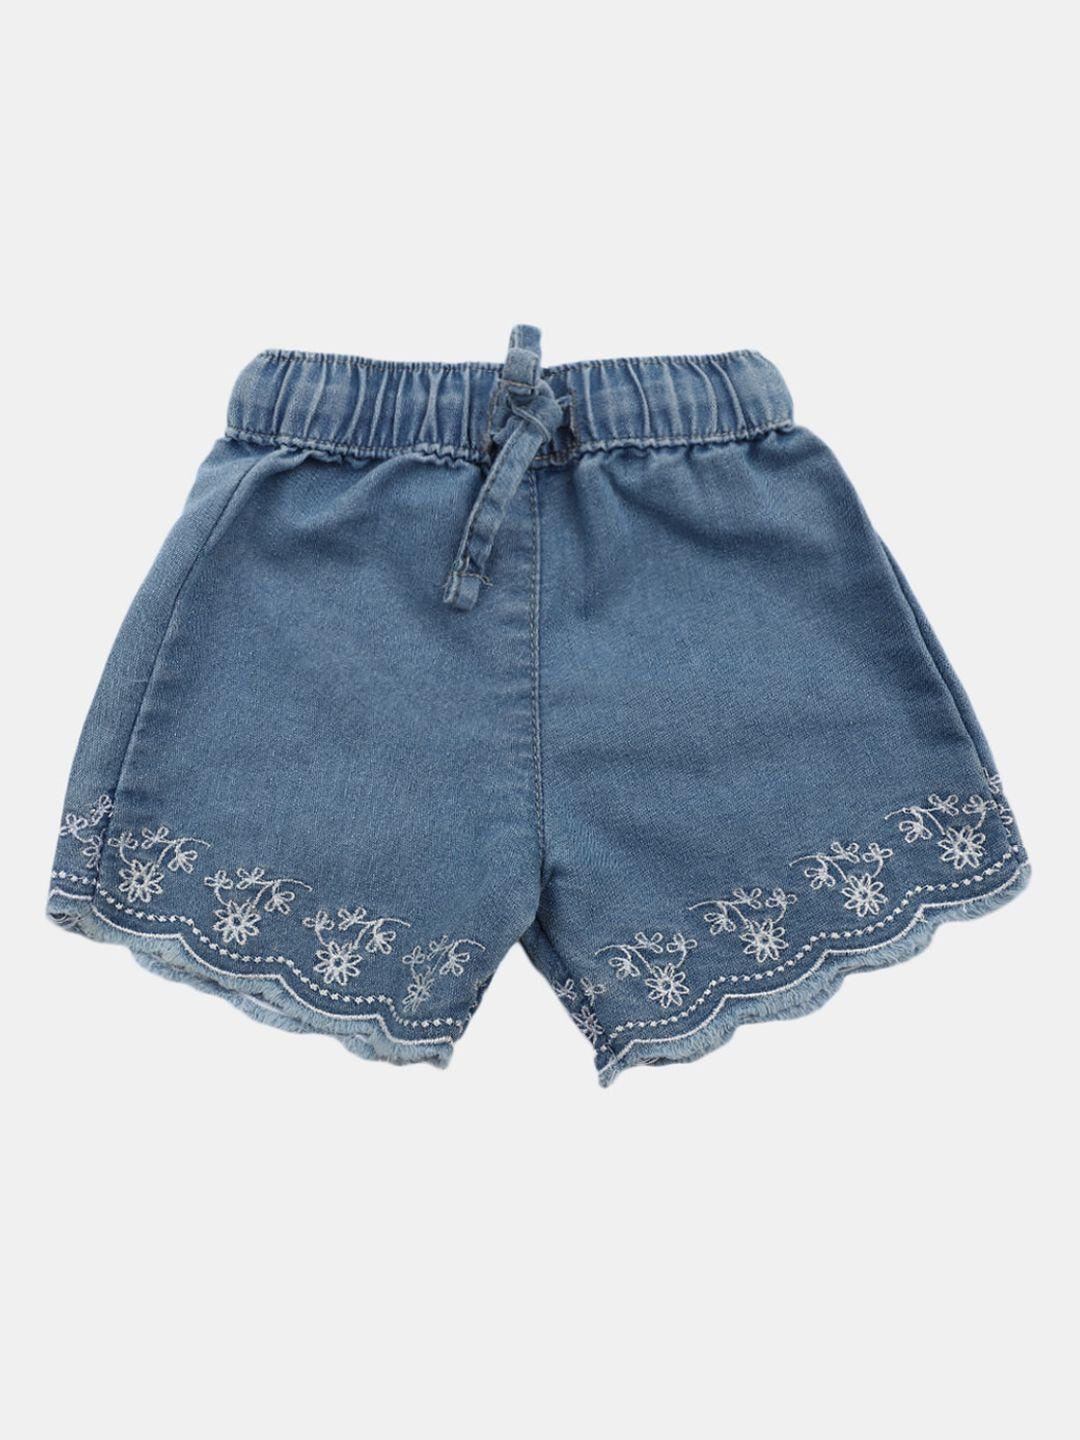 v-mart infants girls cotton denim shorts